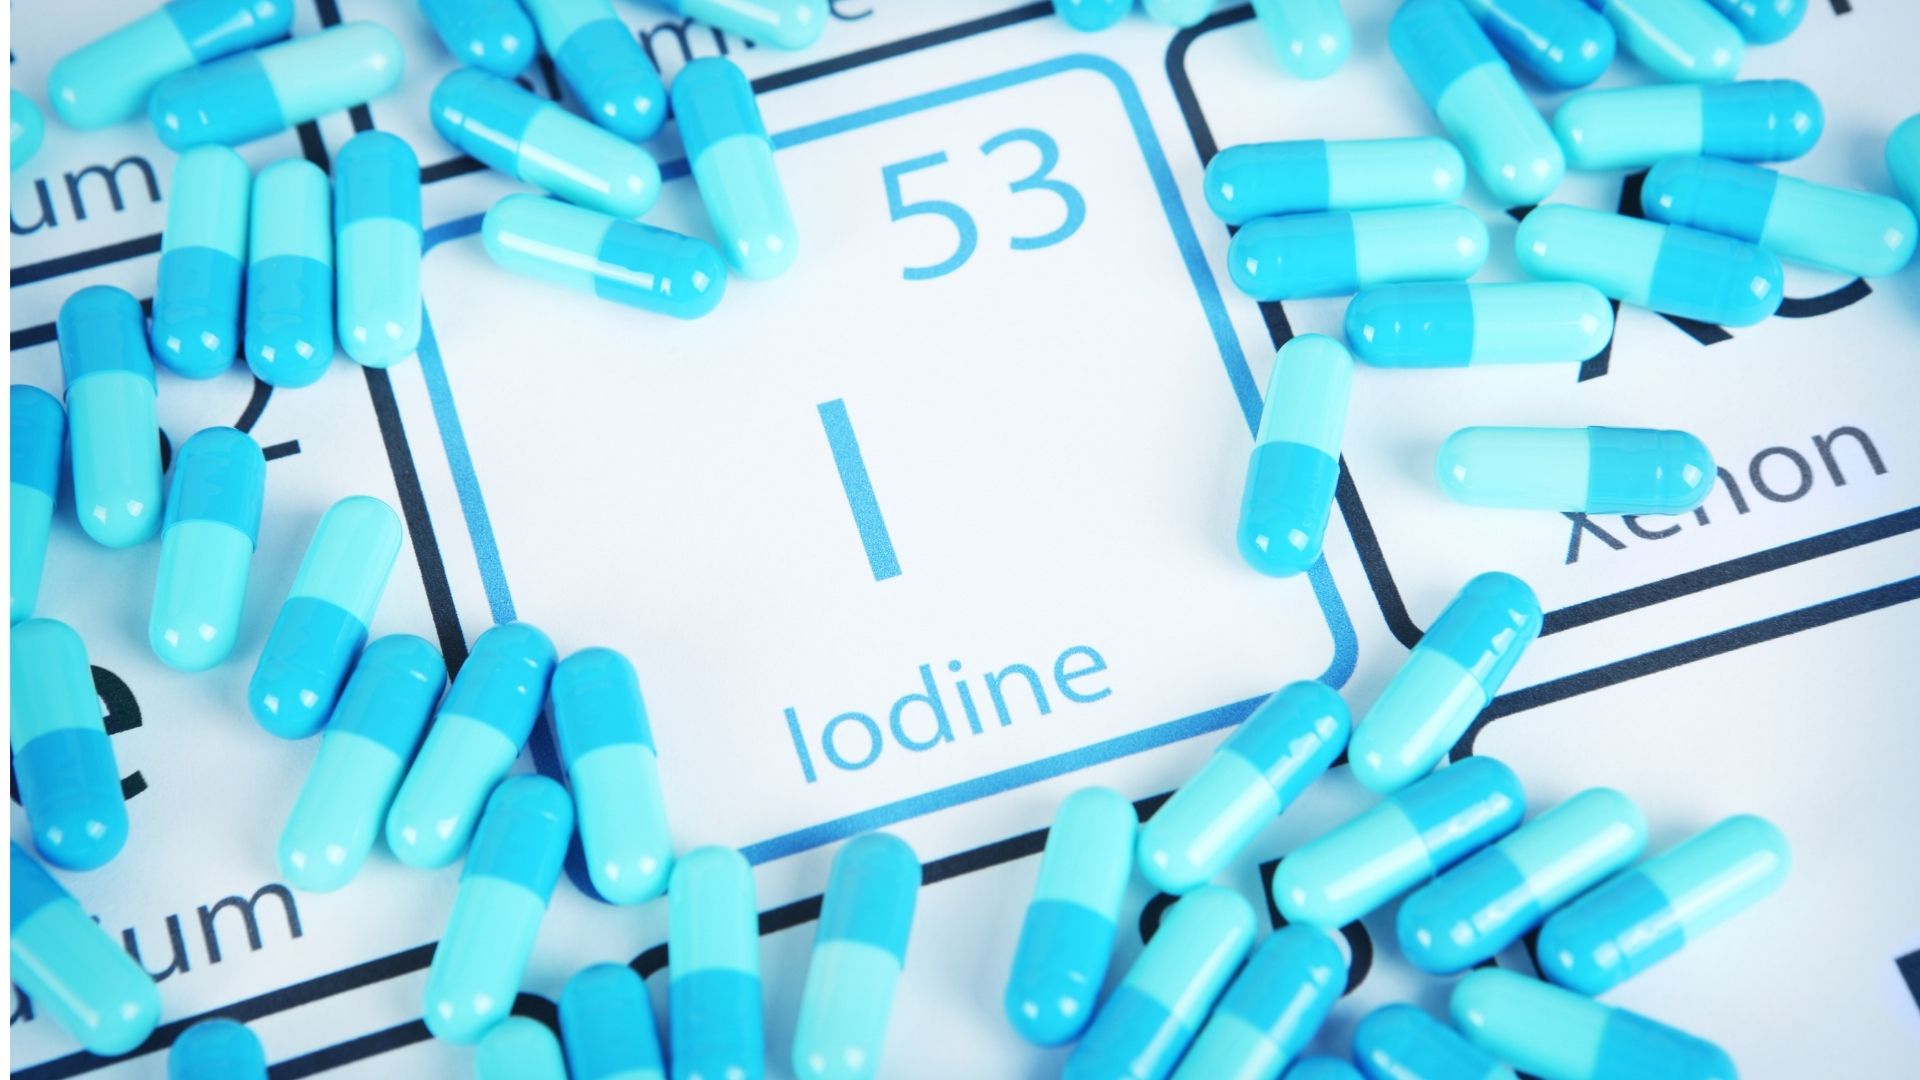 Europeans are buying iodine pills